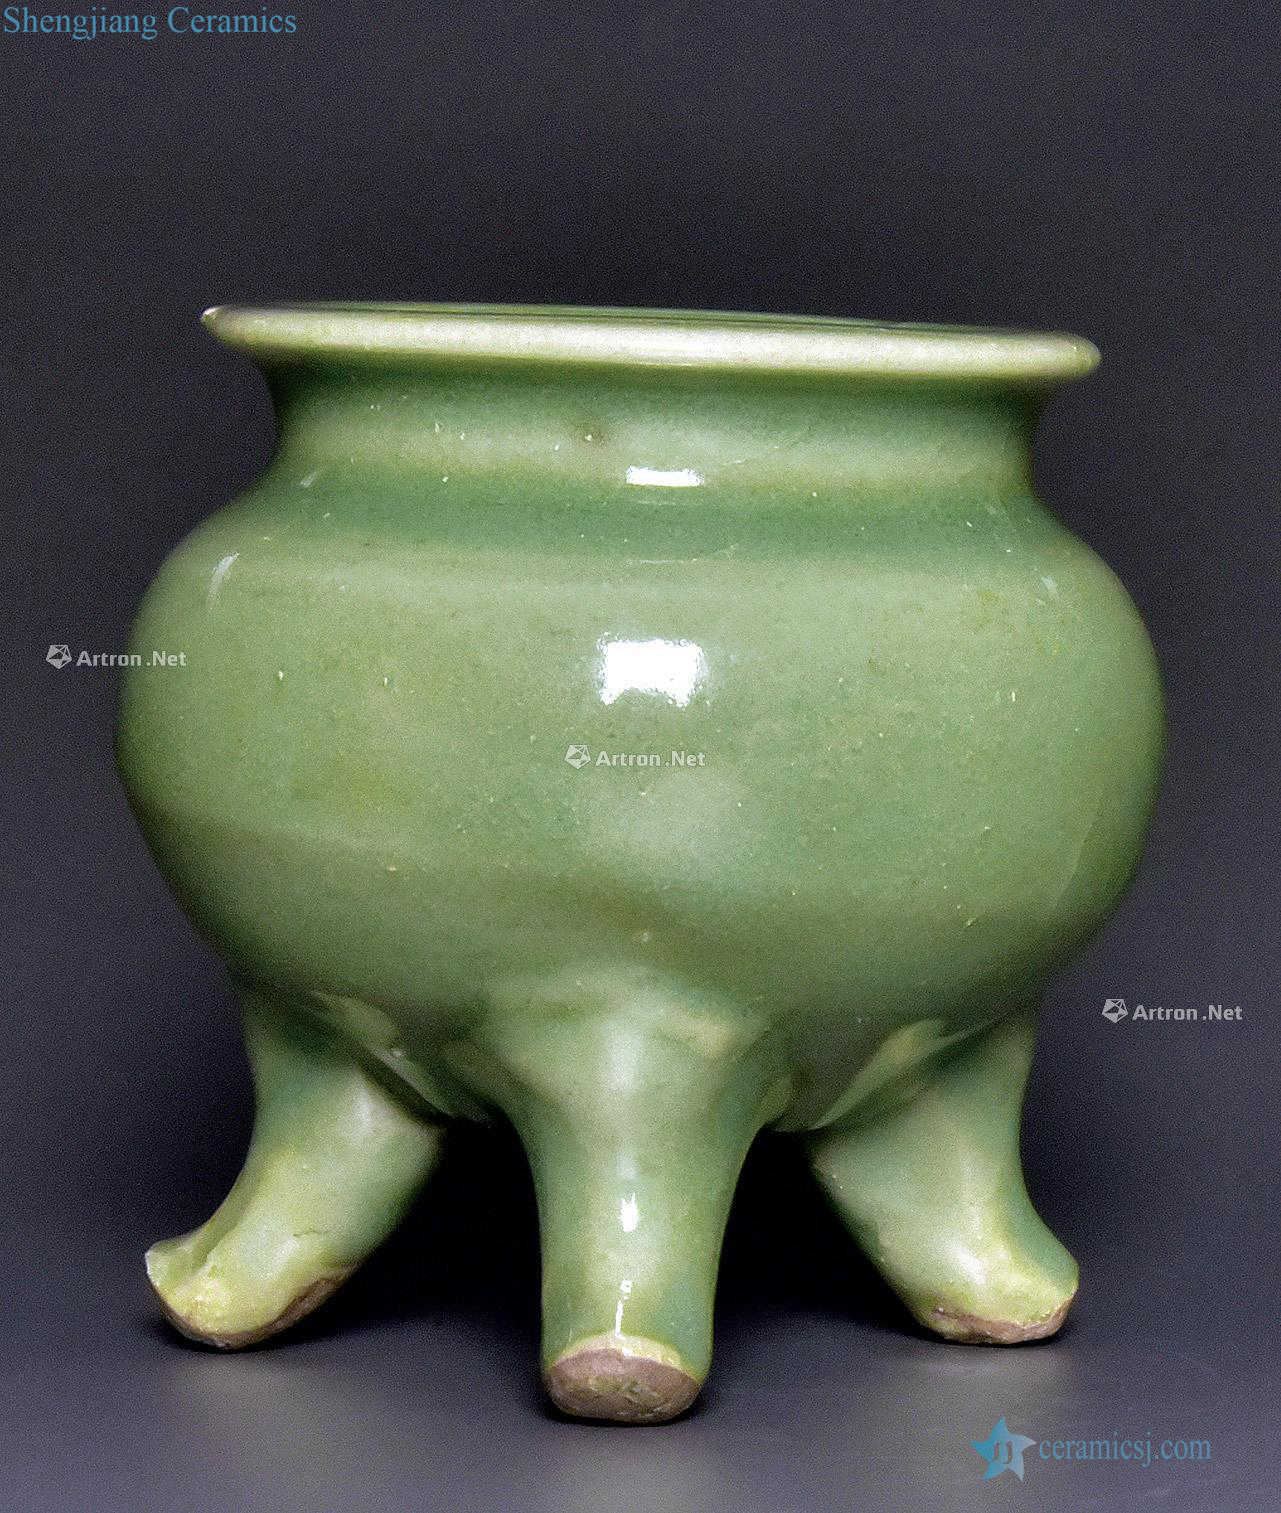 The yuan dynasty Longquan celadon glaze tripod censer